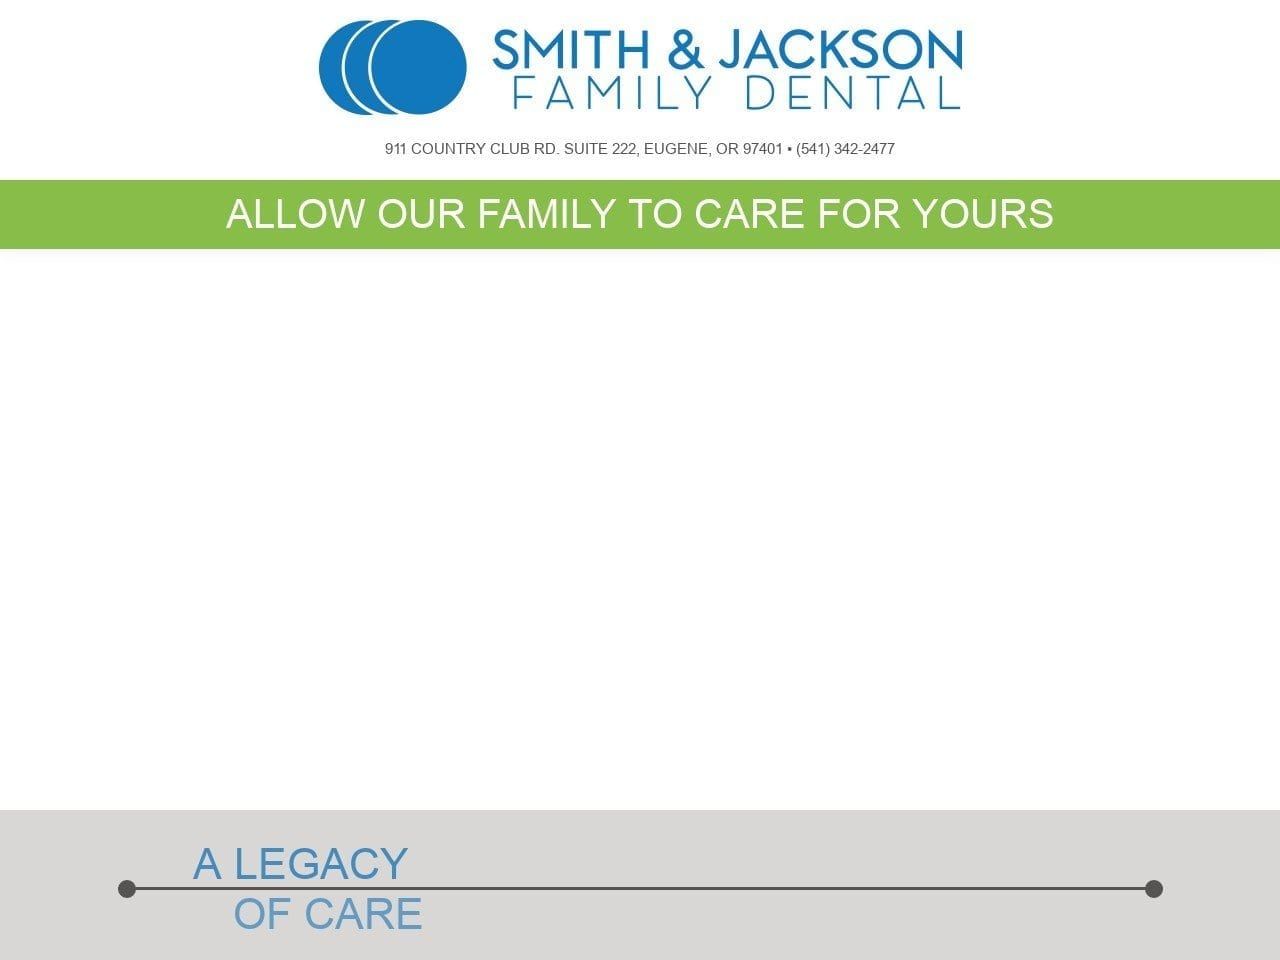 Smith & Jackson Family Dental Website Screenshot from smithjacksondental.com